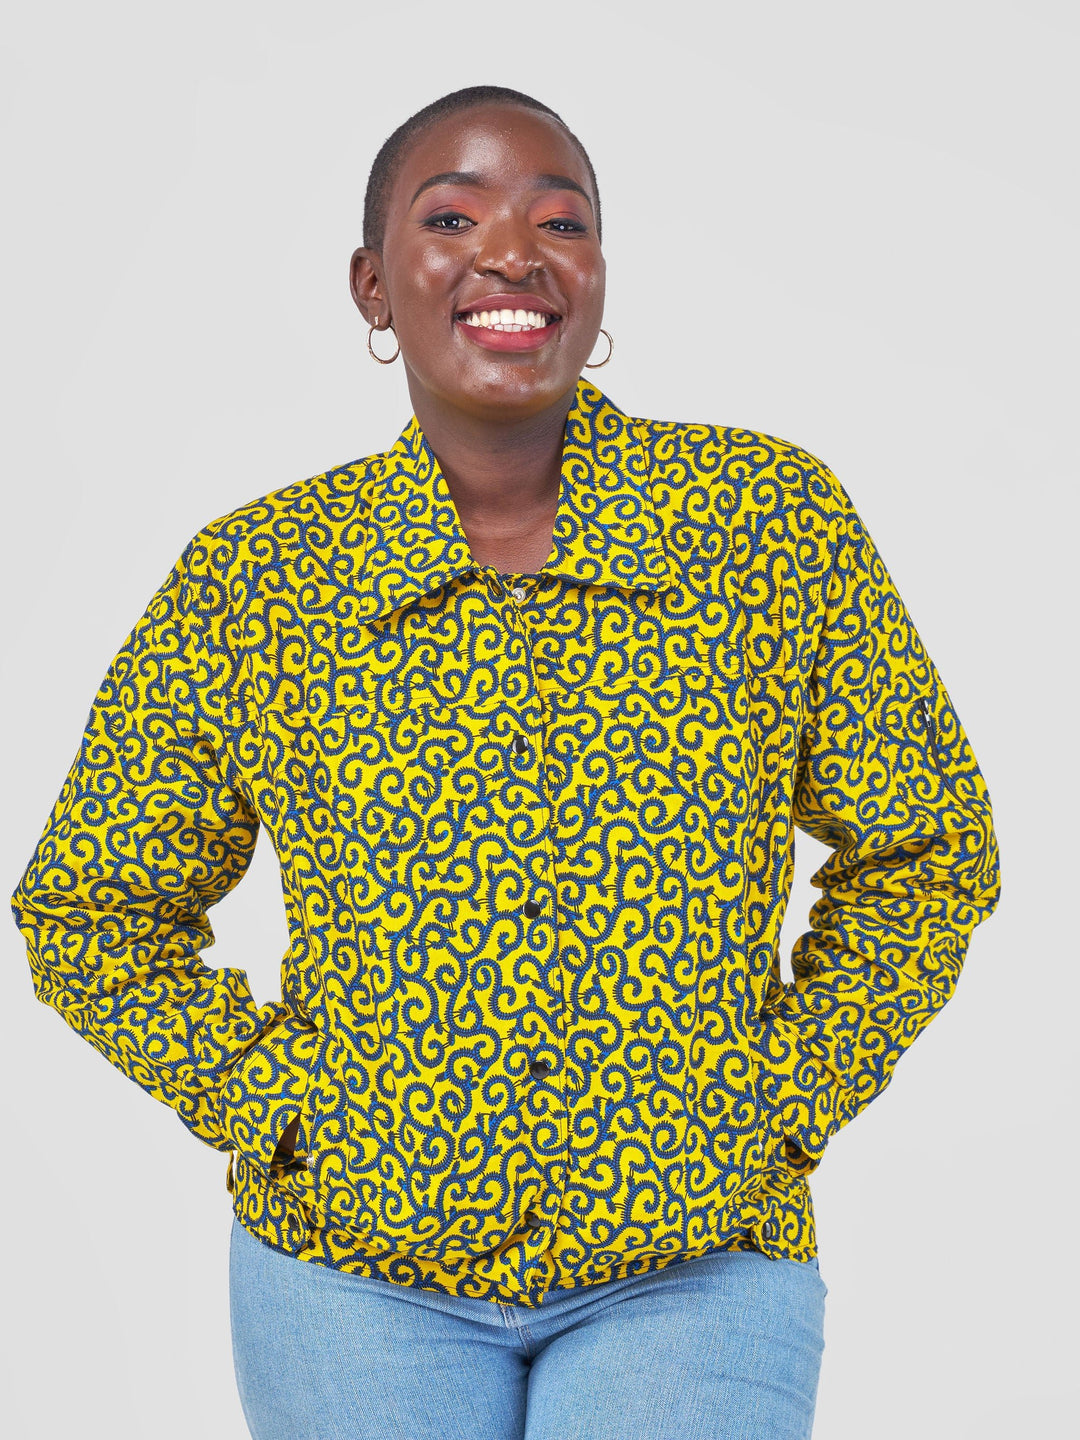 Button-up jacket with collar ‚Asali‘ - mikono.africa Jacken aus Kenia bunte Bomberjacke Partyjacke faire sozial nachhaltig designed in Kenia